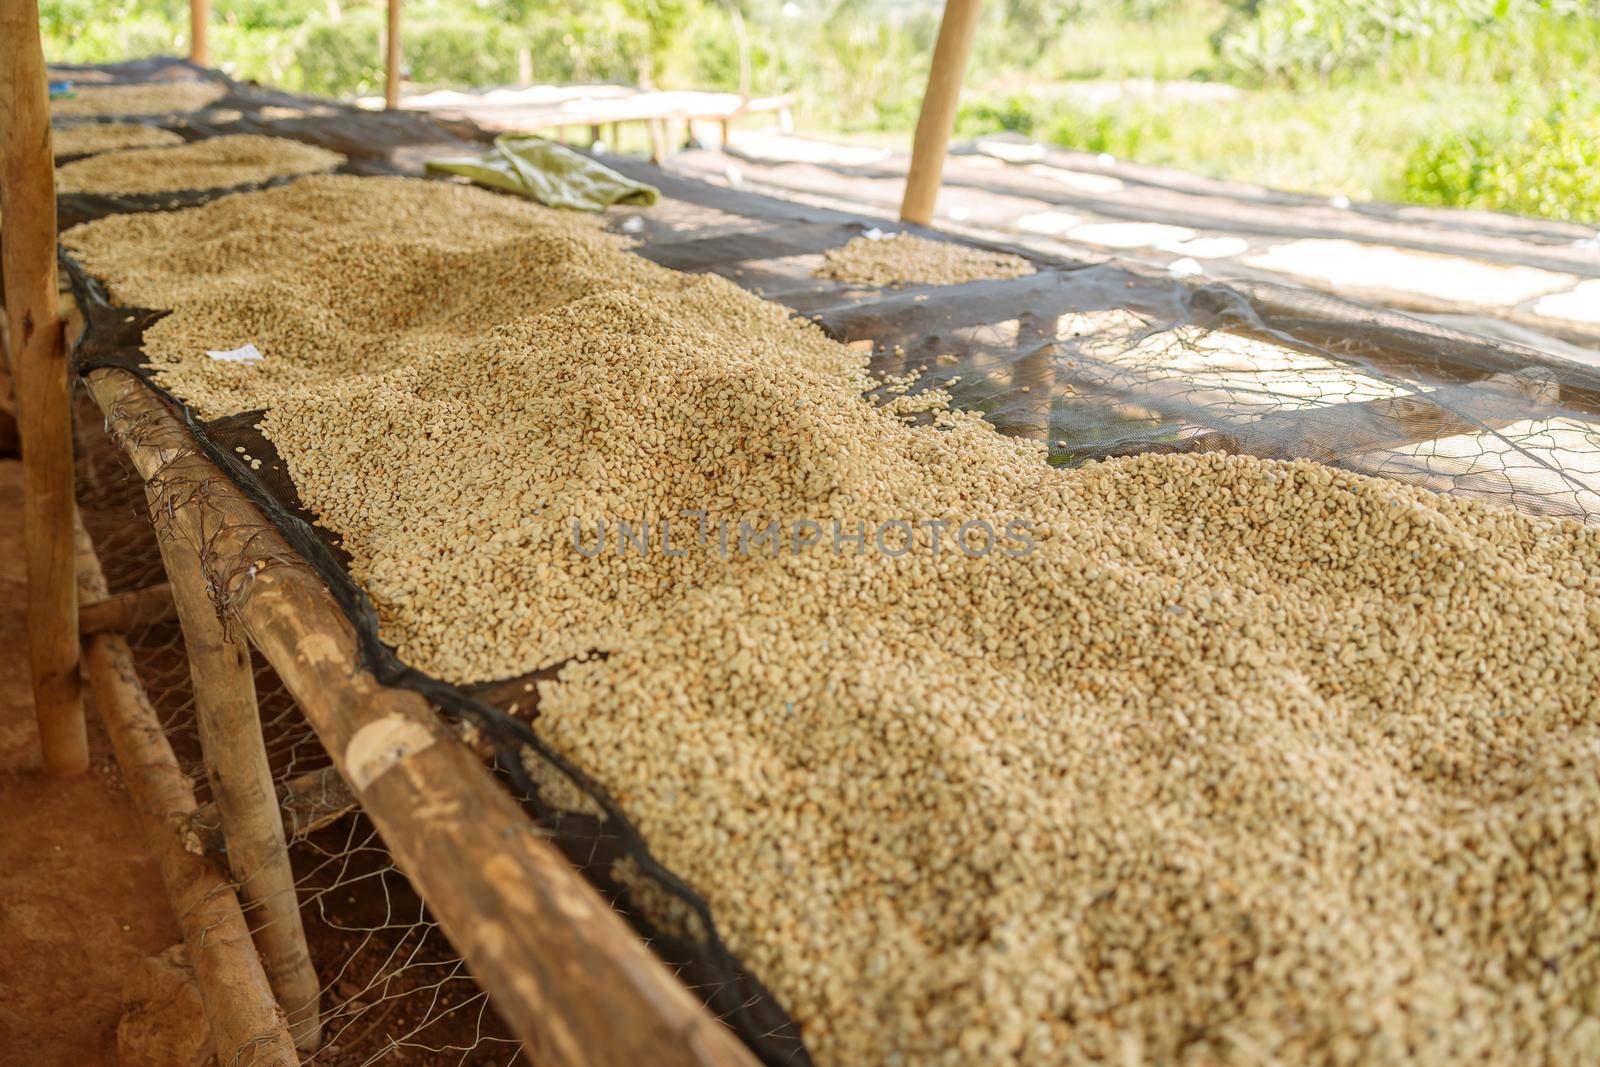 Coffee natural drying process at washing station on coffee farm by Yaroslav_astakhov